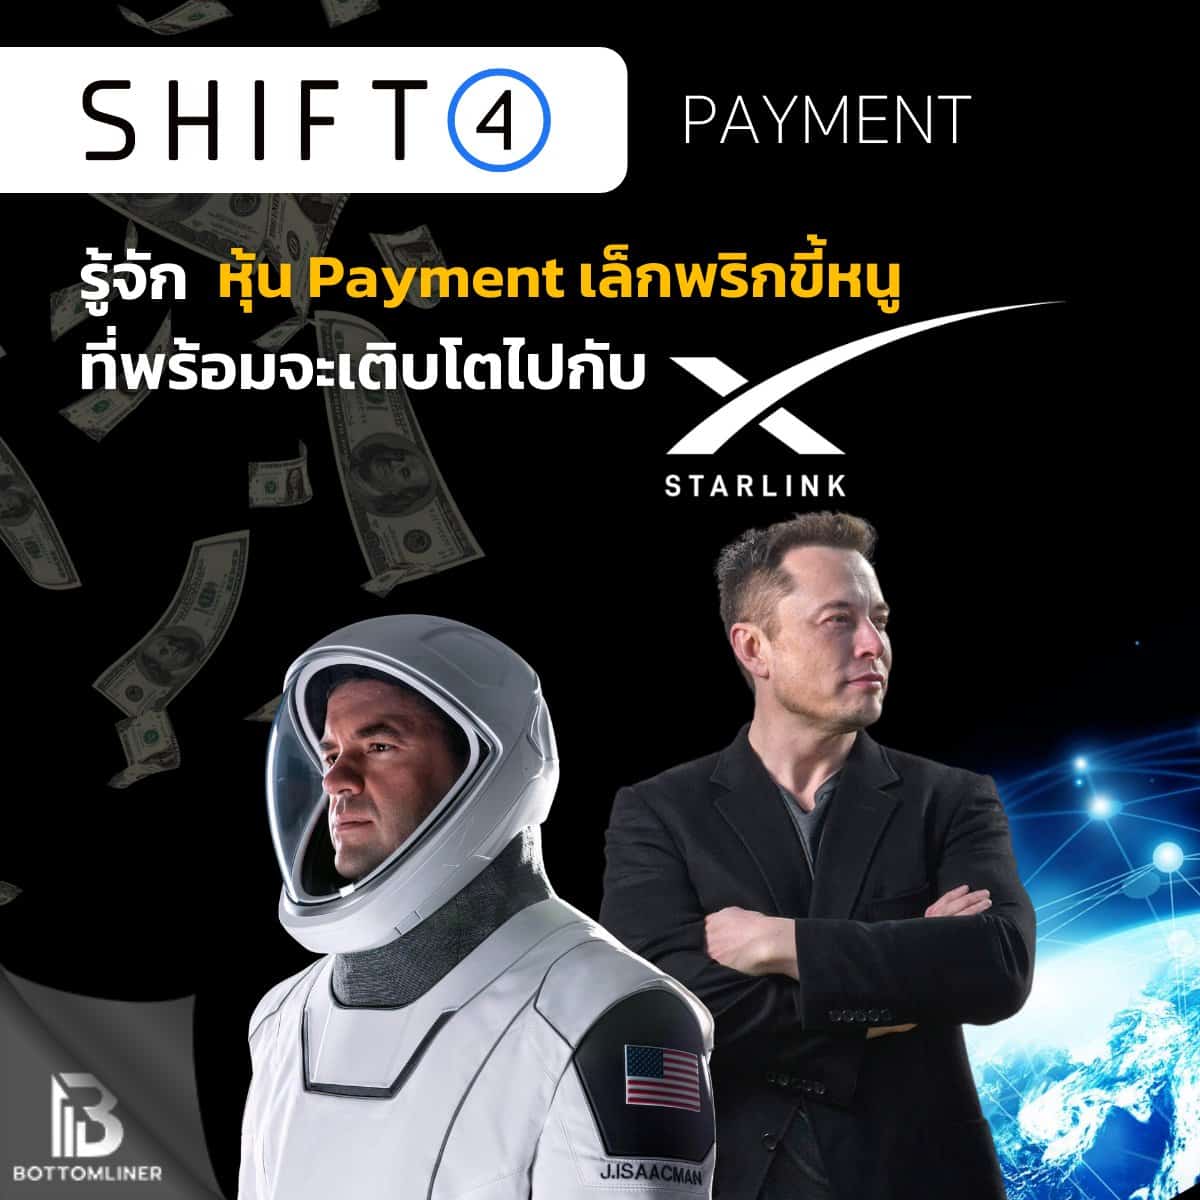 Shift 4 Payment (NYSE: FOUR) รู้จักหุ้น Payment เล็กพริกขี้หนูที่พร้อมจะเติบโตไปกับ Starlink